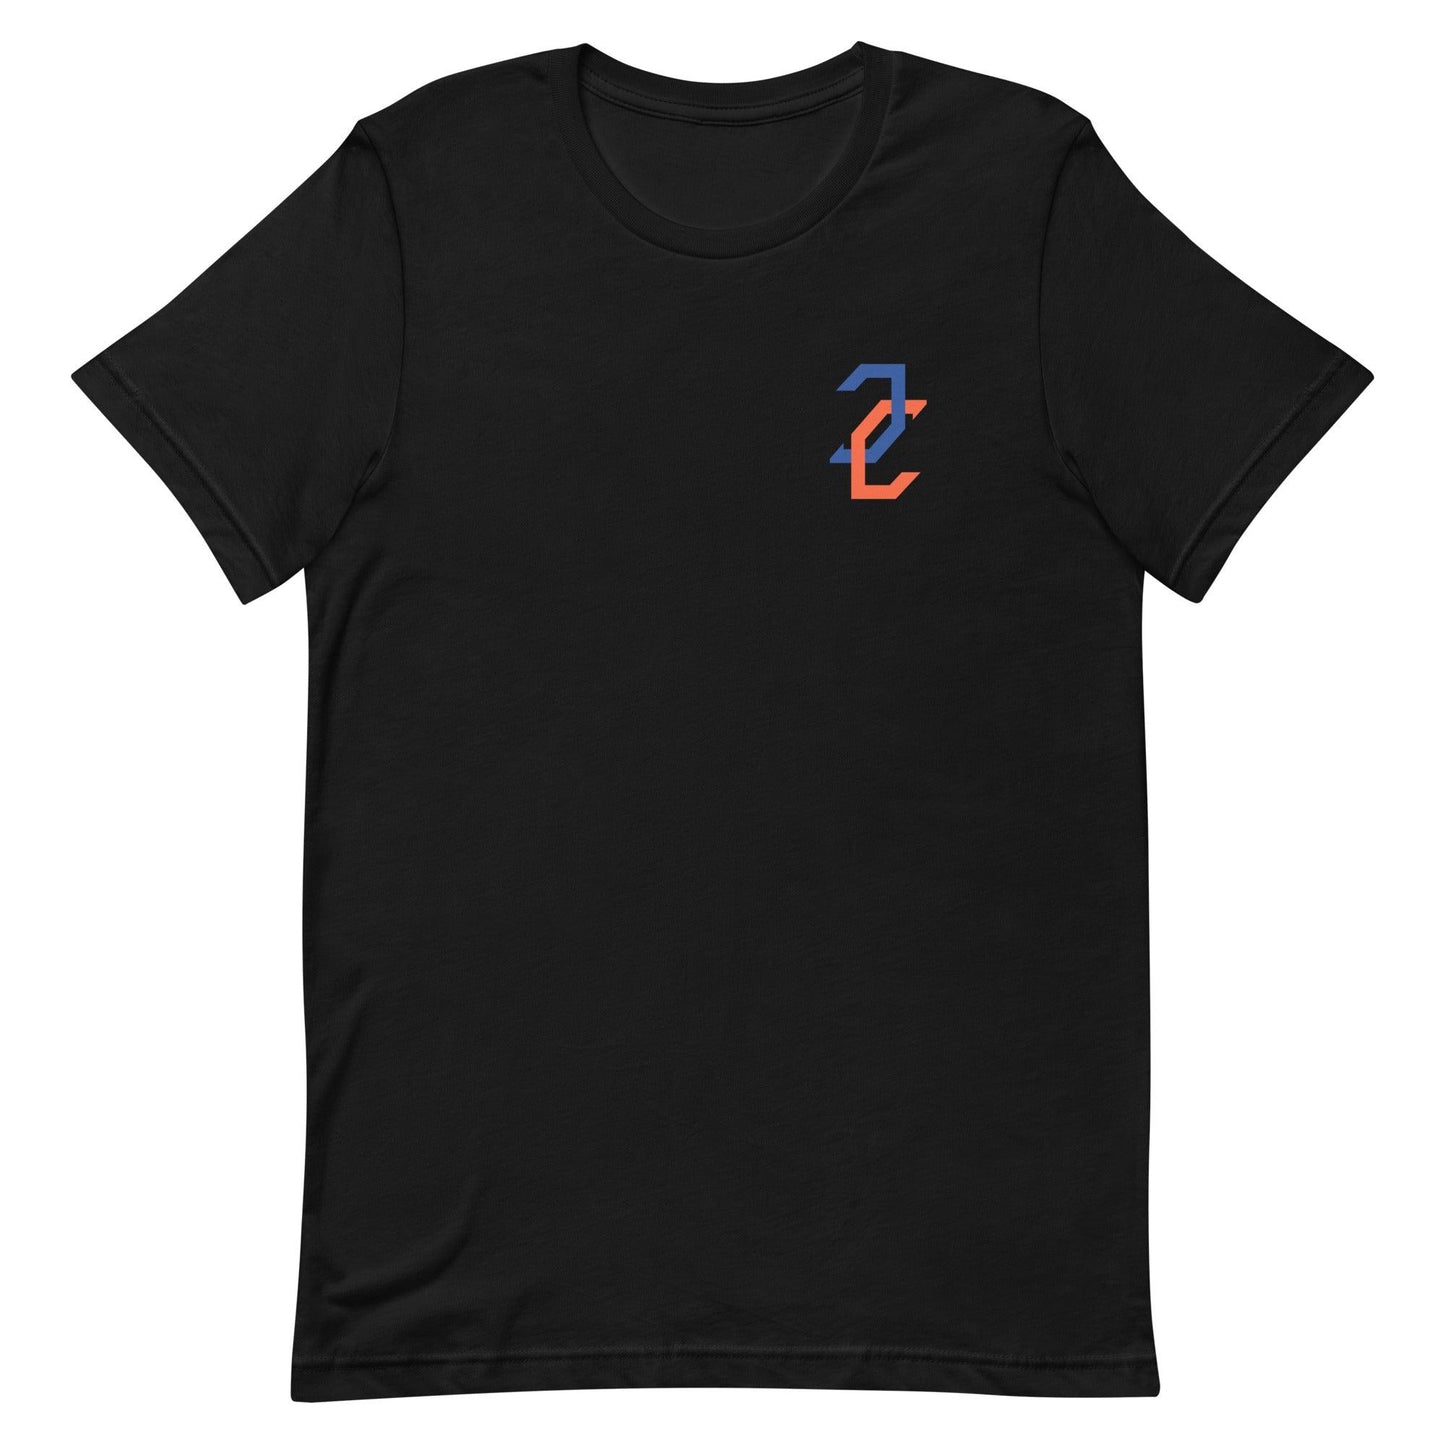 Jordan Castell "Essential" t-shirt - Fan Arch